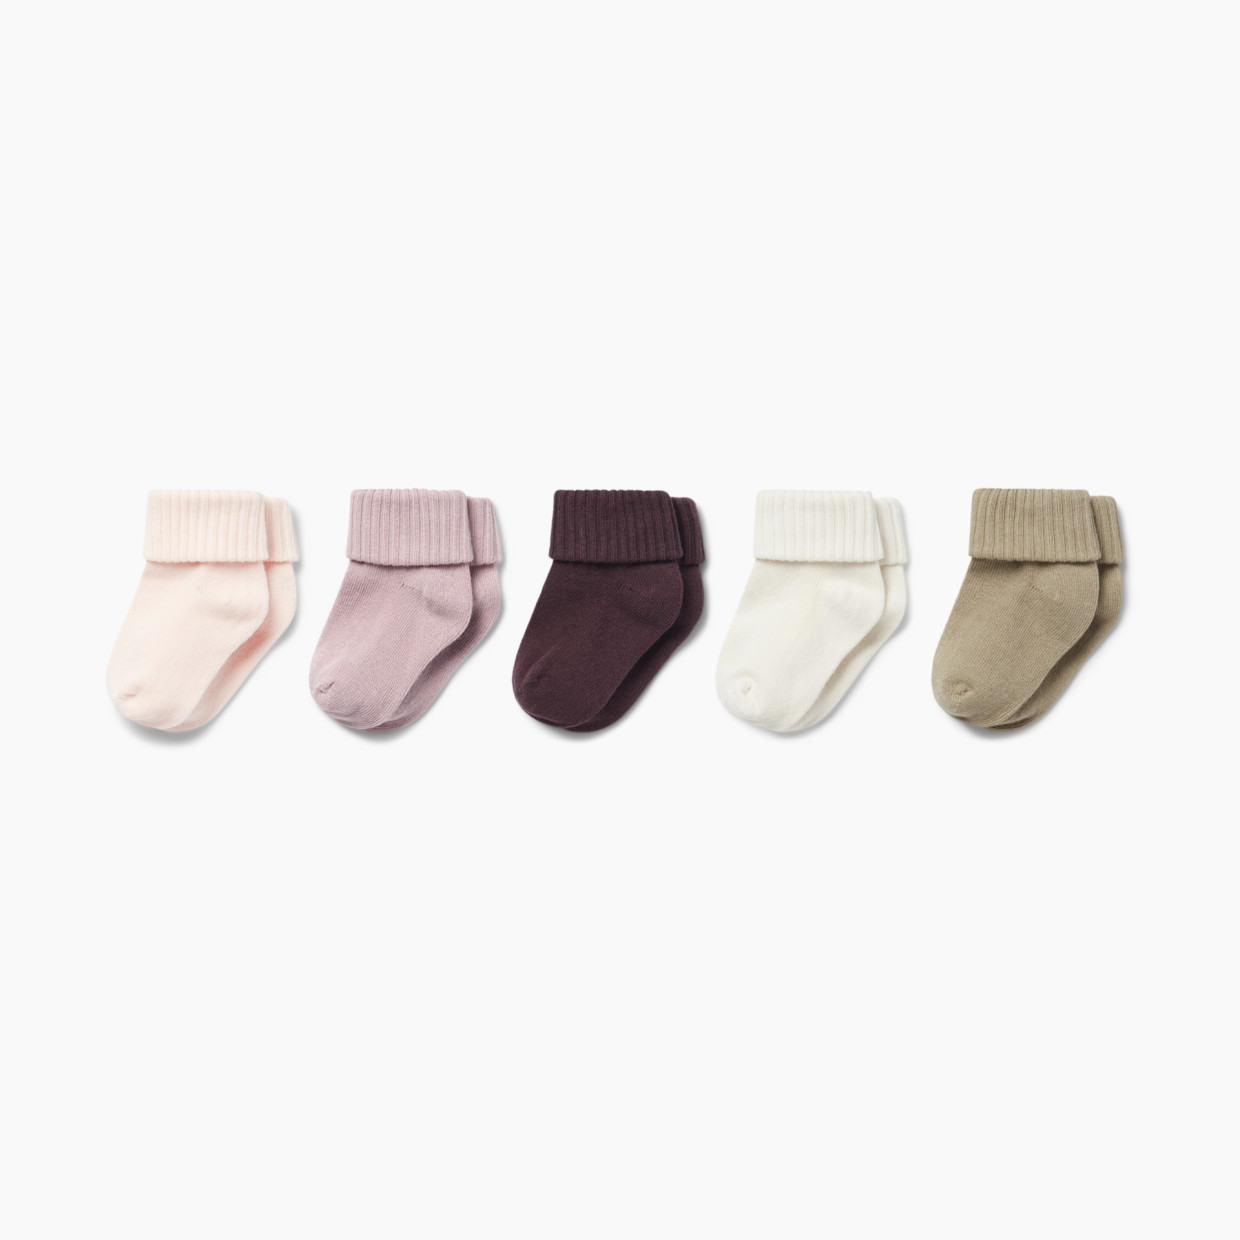 MORI Ribbed Socks 5 Pack - Berry Mix, 0 -6 M.